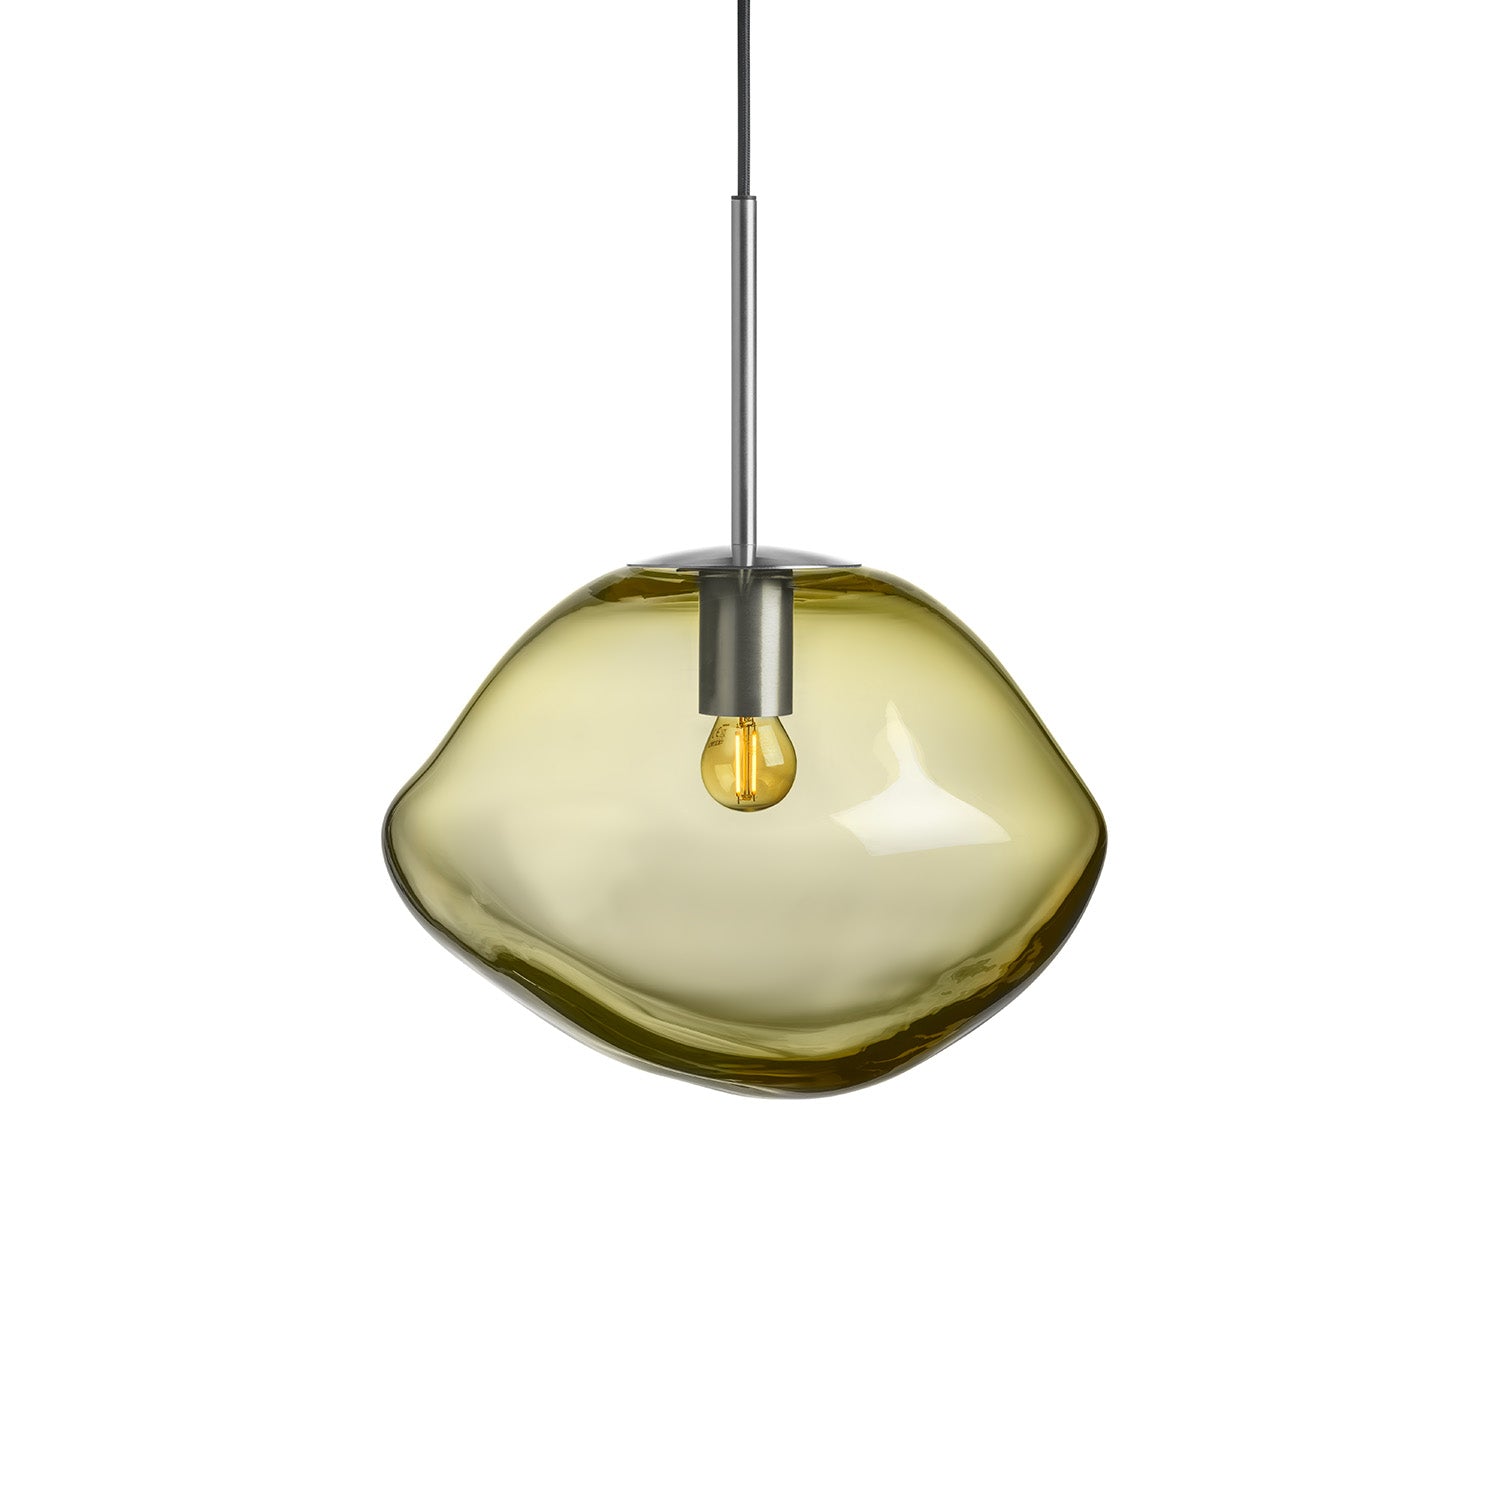 CRYSTAL STONE - Blown glass pebble pendant light